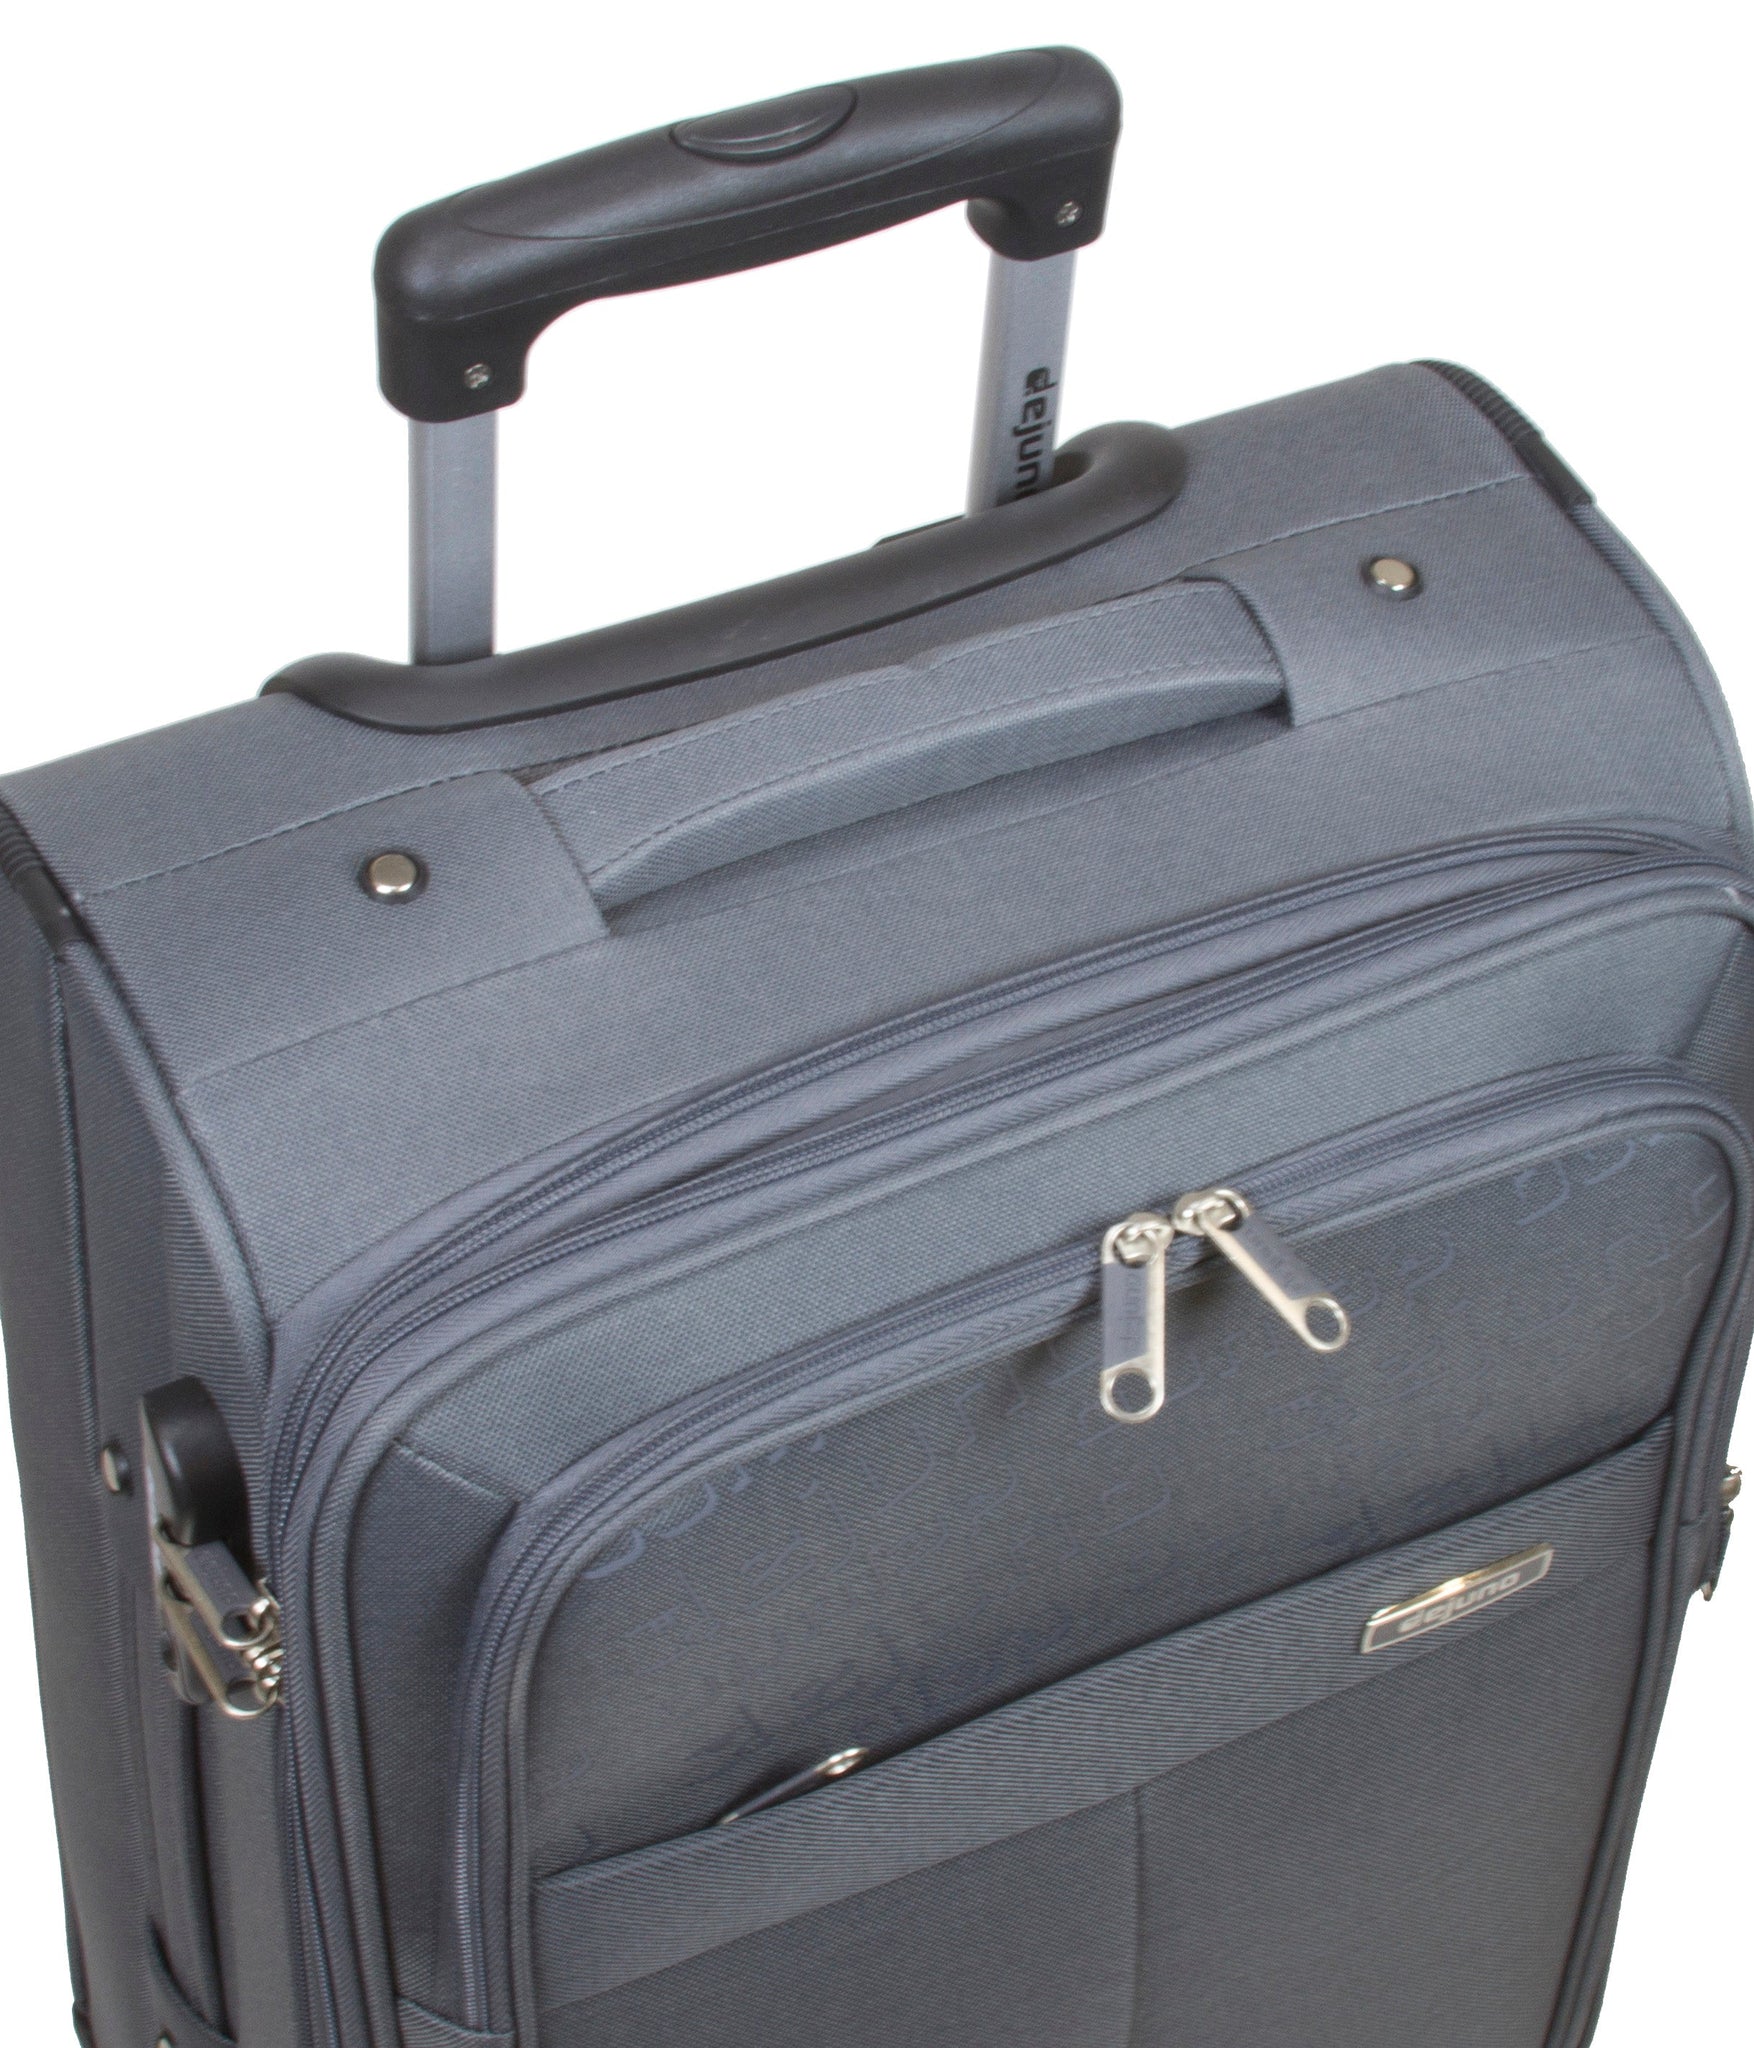 Dejuno Tuscany 3-Piece Lightweight Spinner Luggage Set